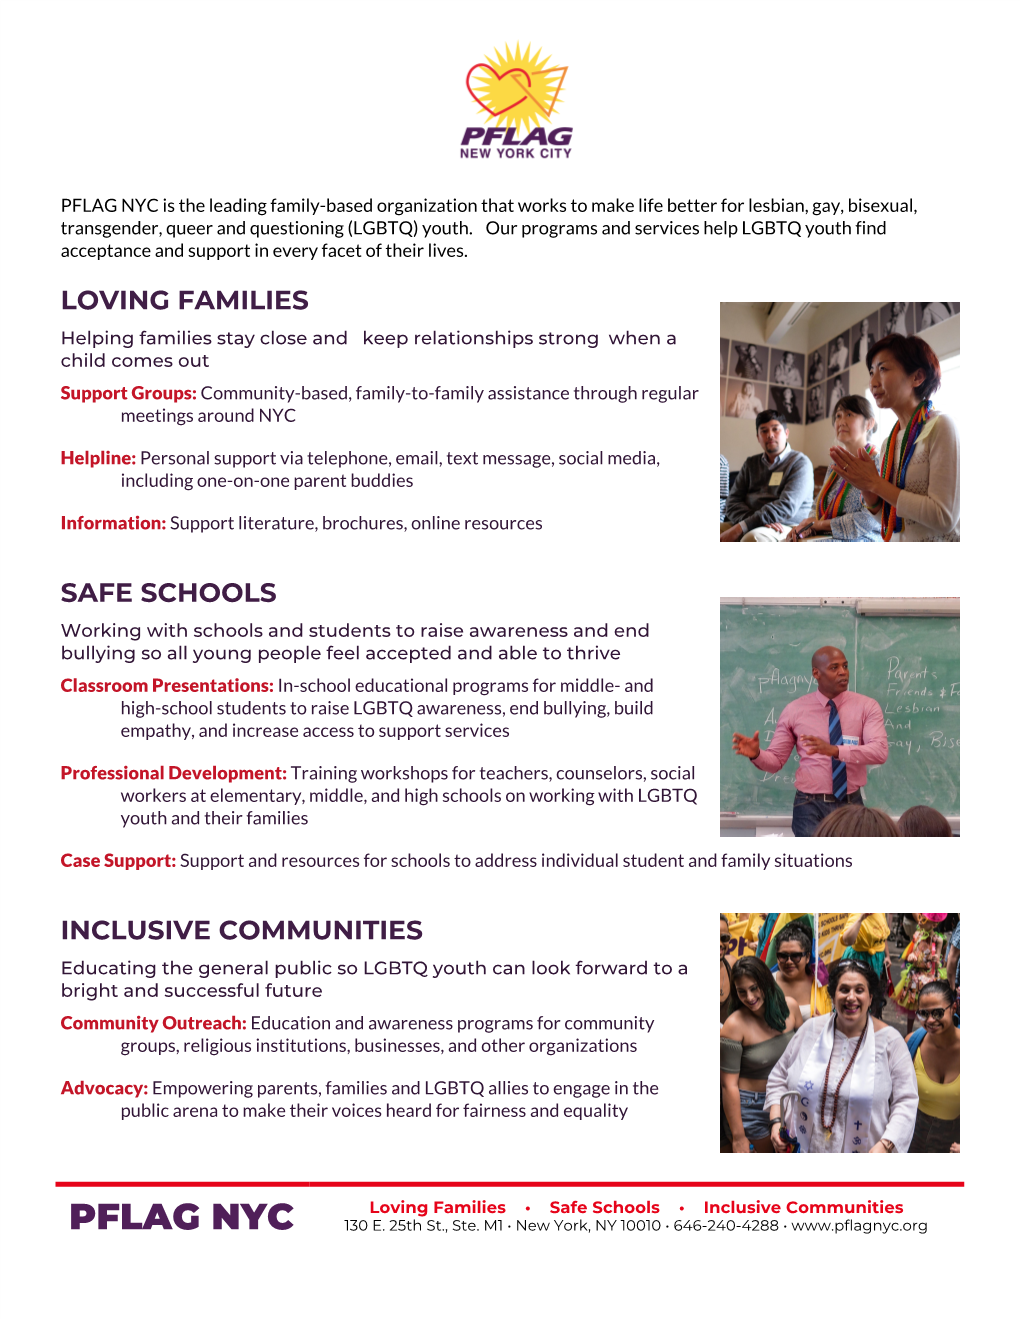 PFLAG NYC Meeting Info